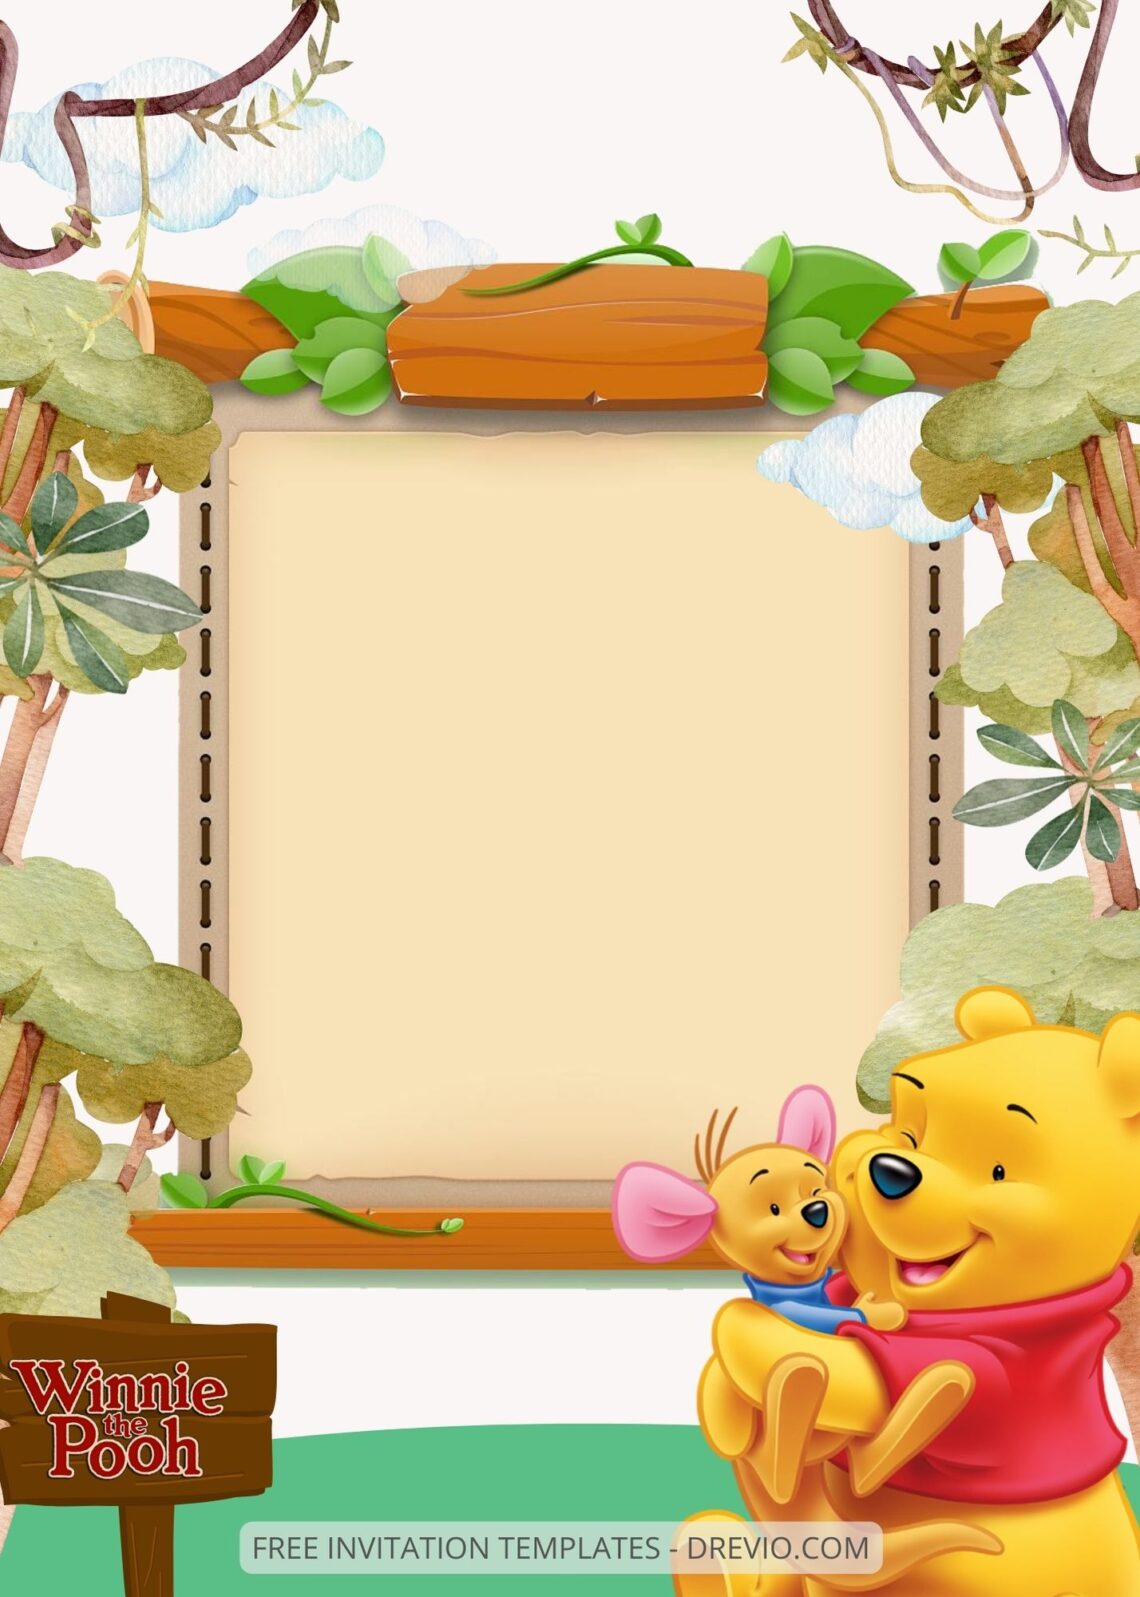 FREE EDITABLE - 9+ Winnie The Pooh Canva Birthday Invitation Templates Six